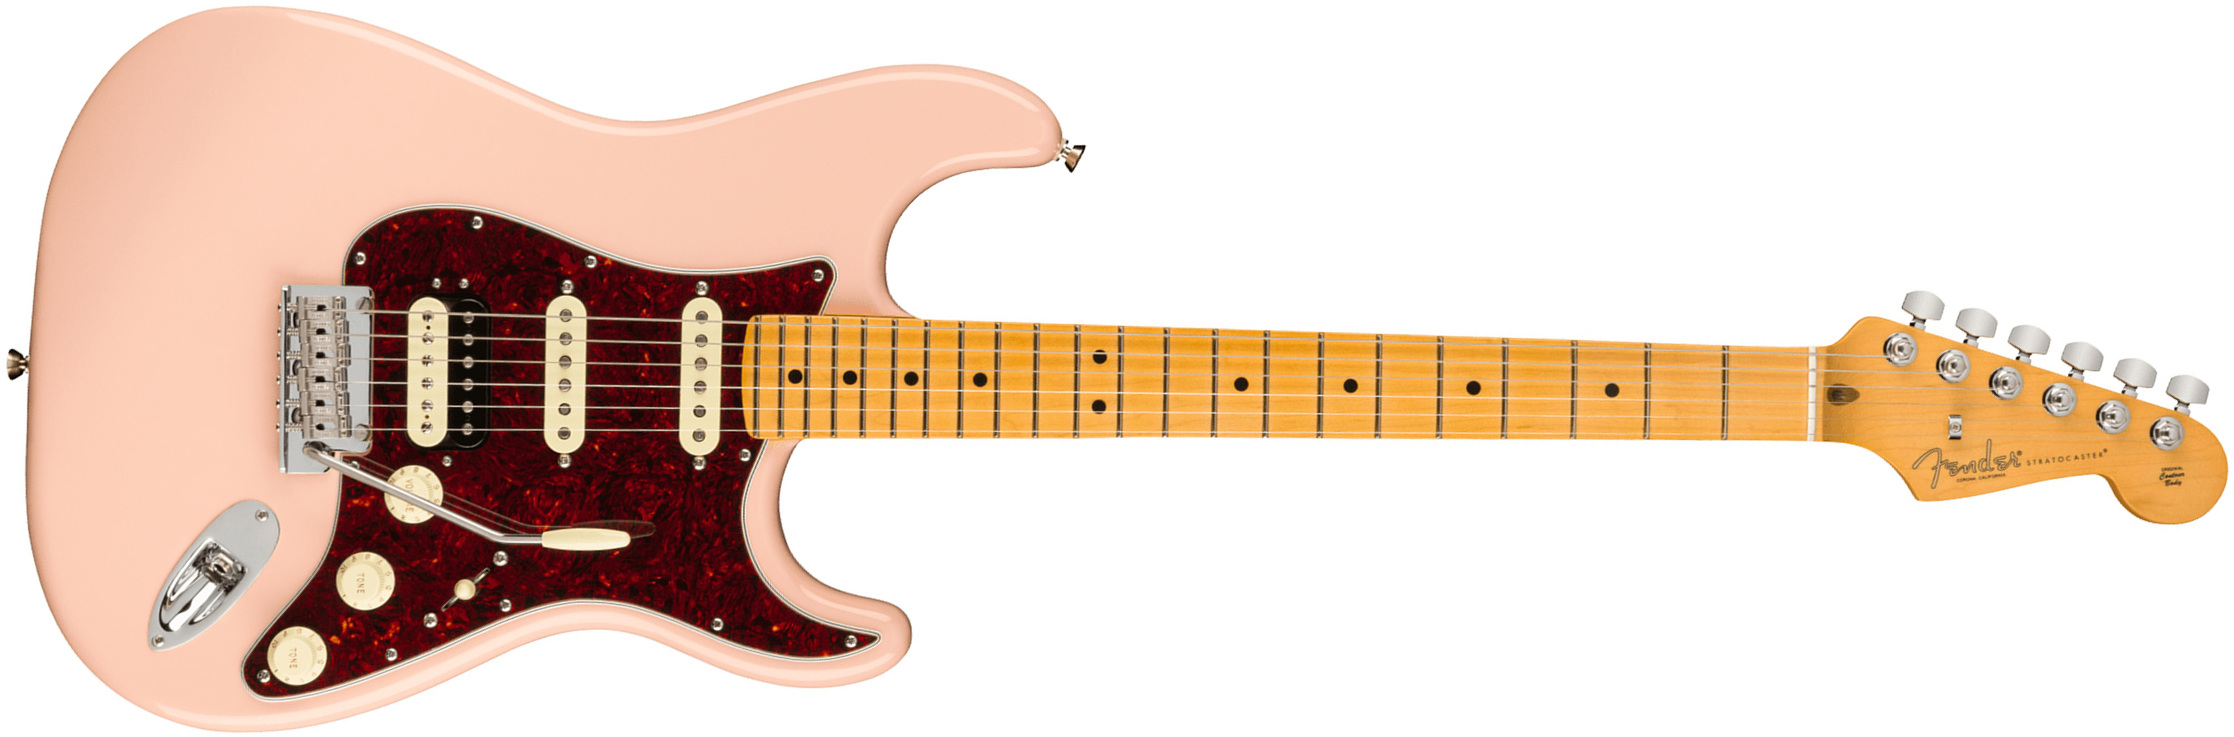 Fender Strat American Pro Ii Ltd Hss Trem Mn - Shell Pink - Guitare Électrique Forme Str - Main picture